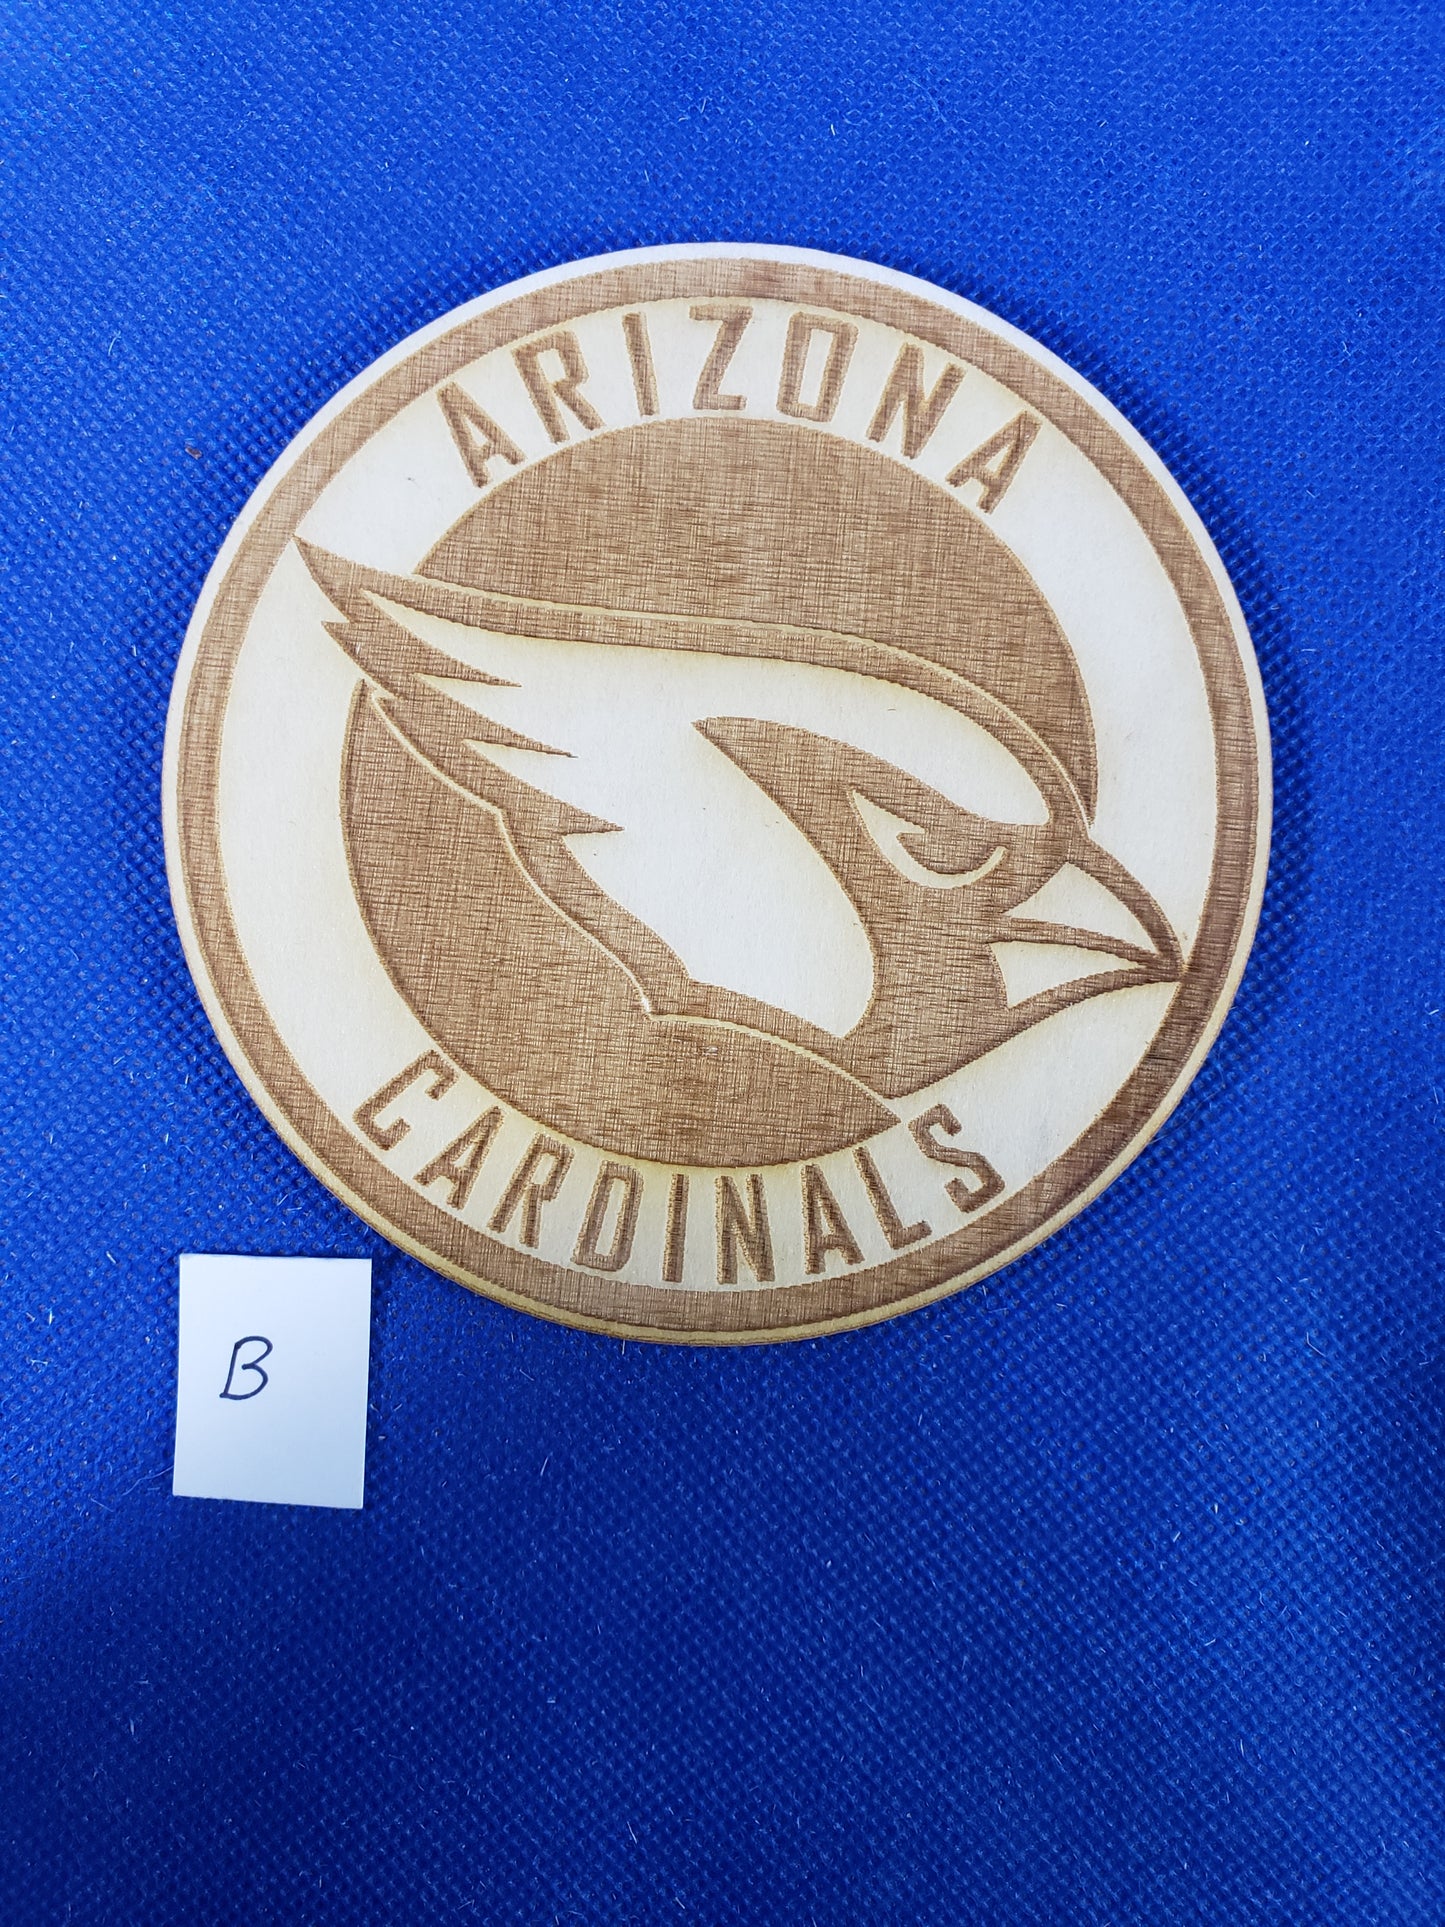 Arizona Cardinals Round-Laser cut natural wooden blank